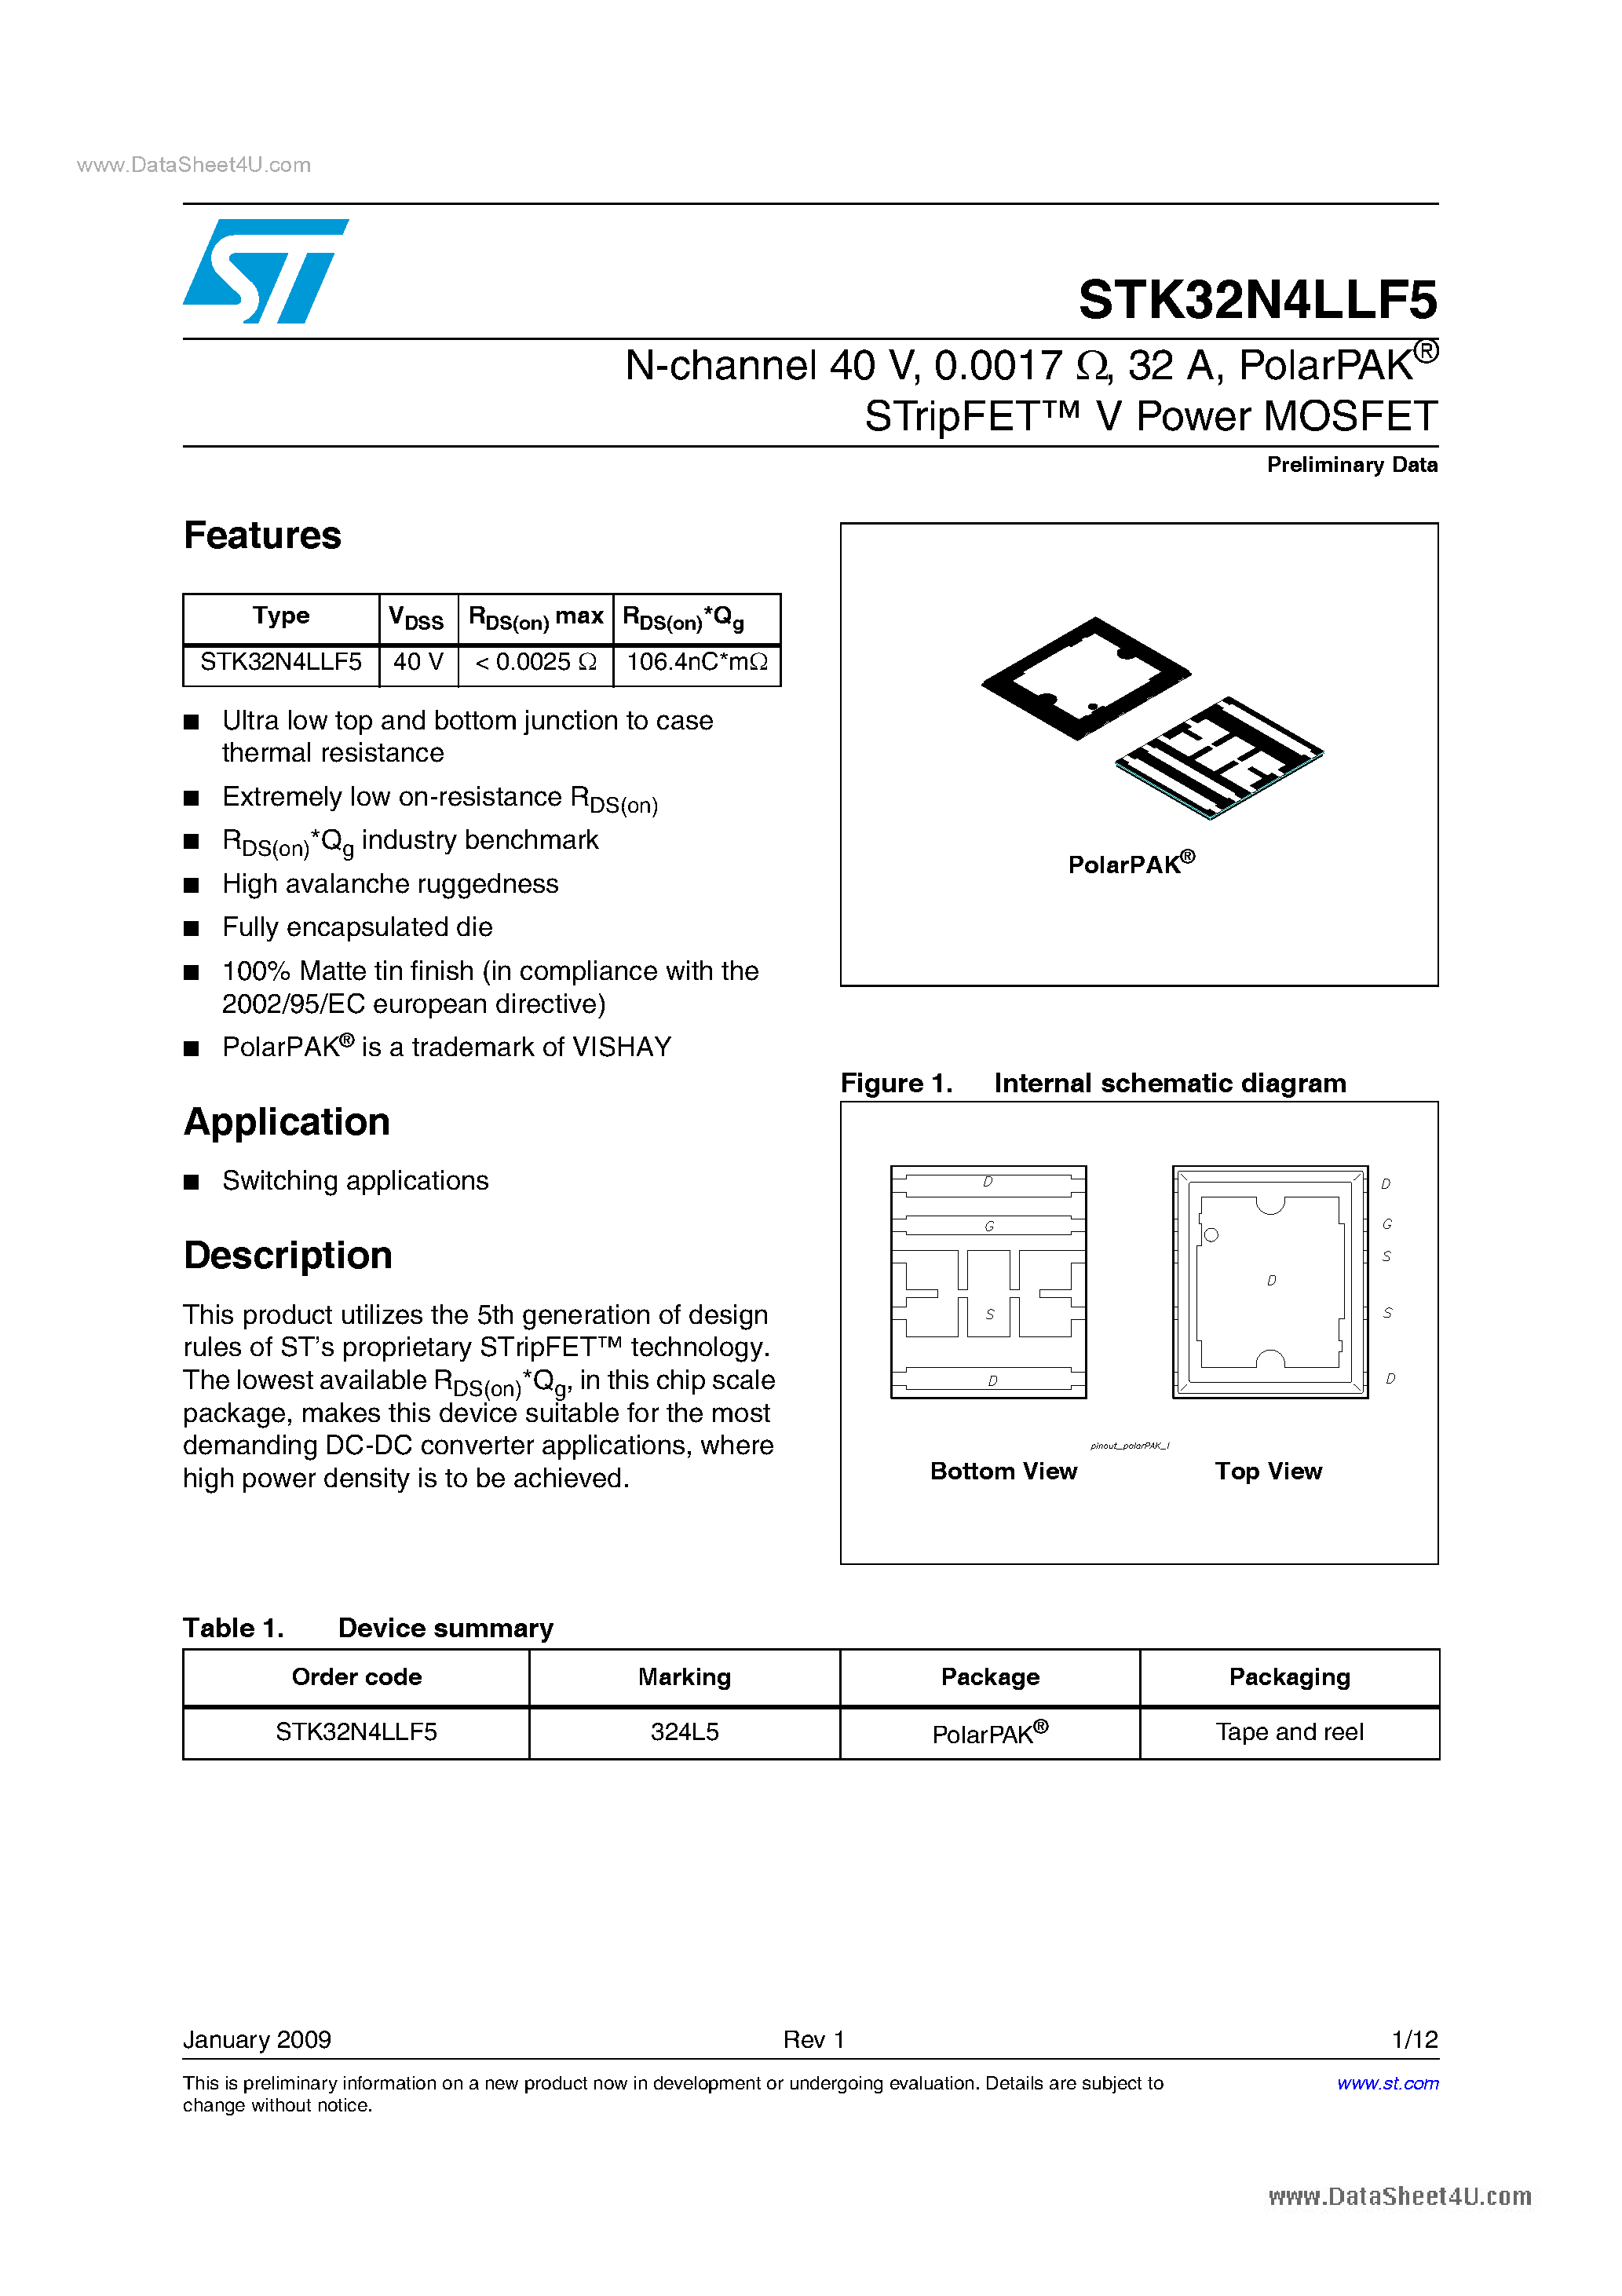 Даташит STK32N4LLF5 - Power MOSFET страница 1